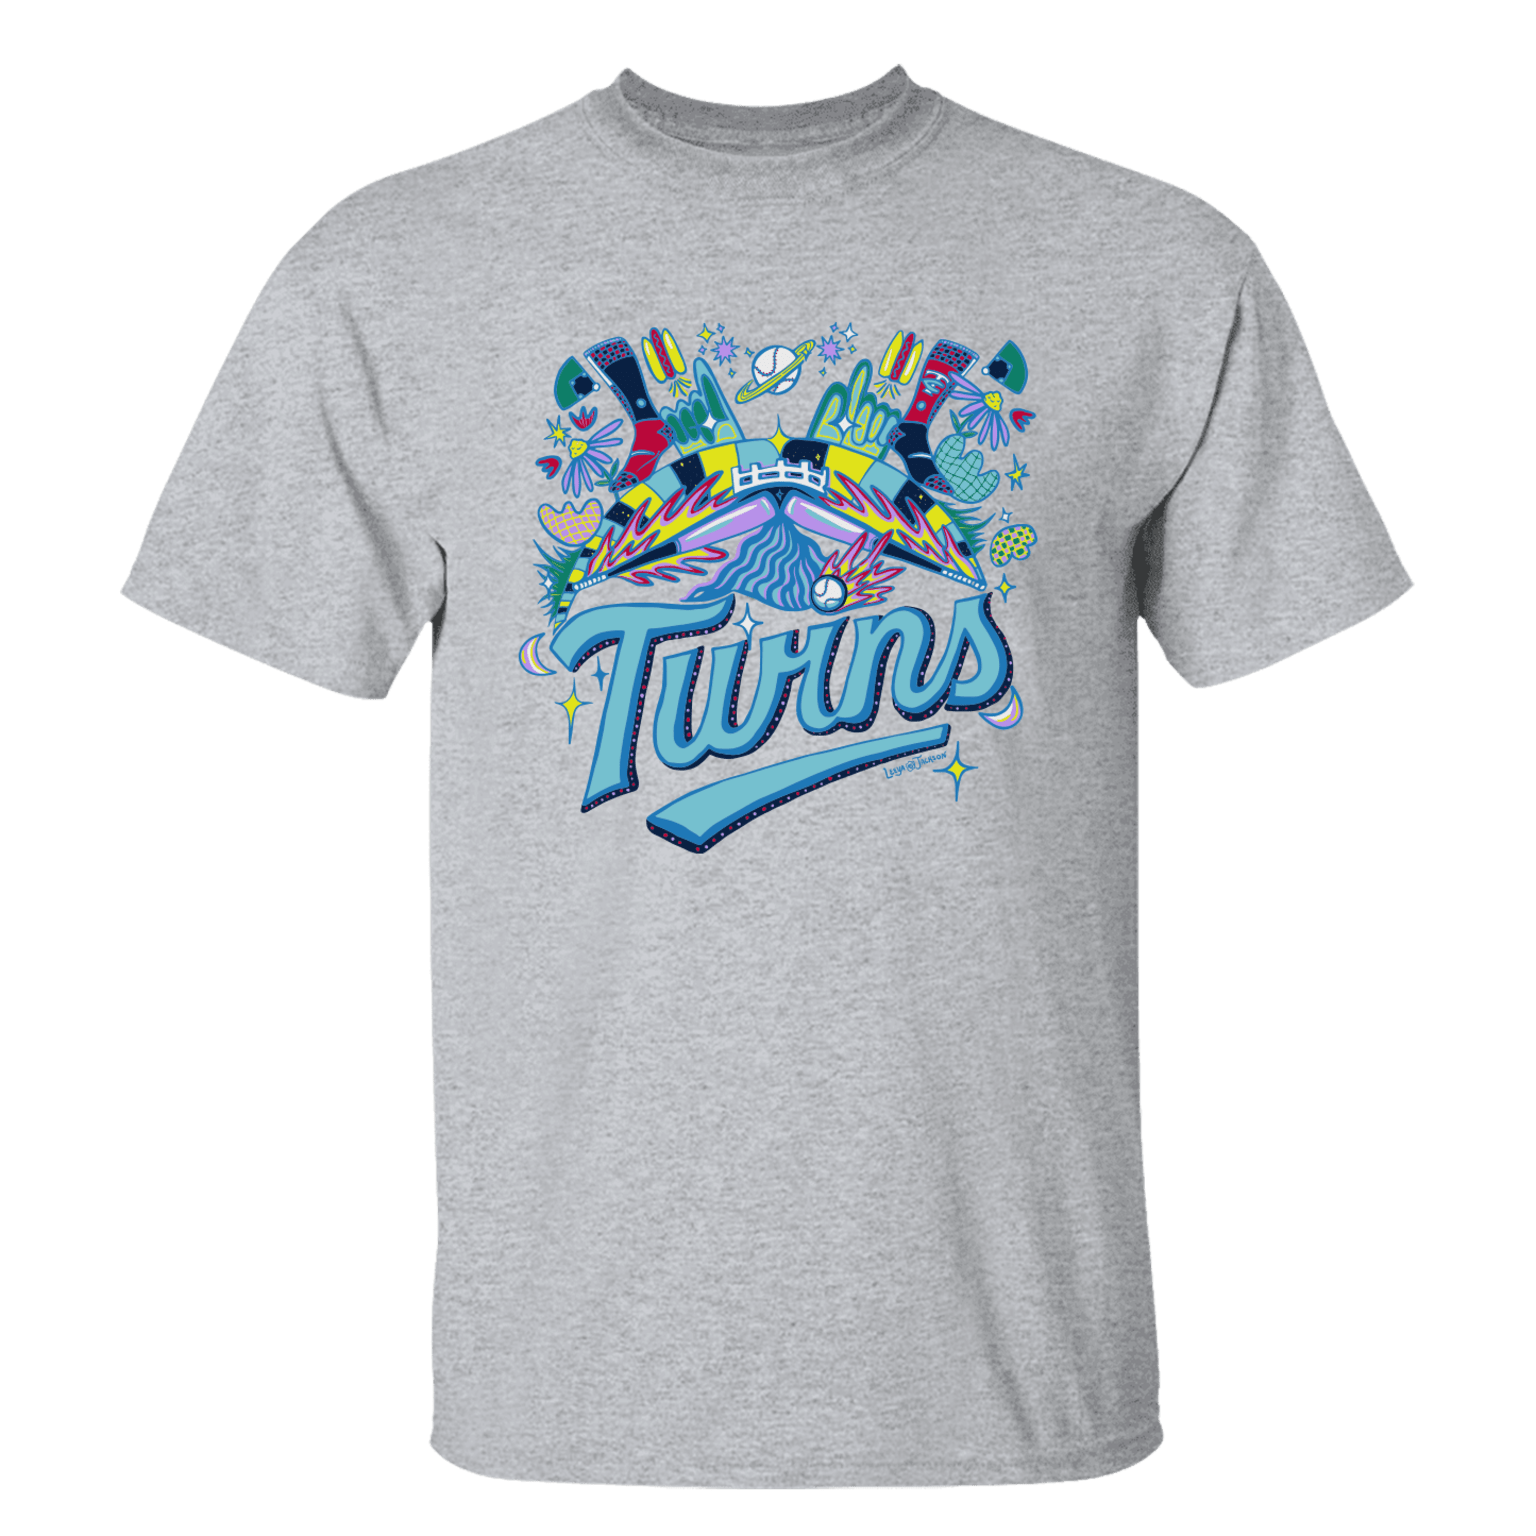 Minnesota Twins T-Shirt Tuesday Shirt, SIZE MED BRIAN BRITIGAN 4